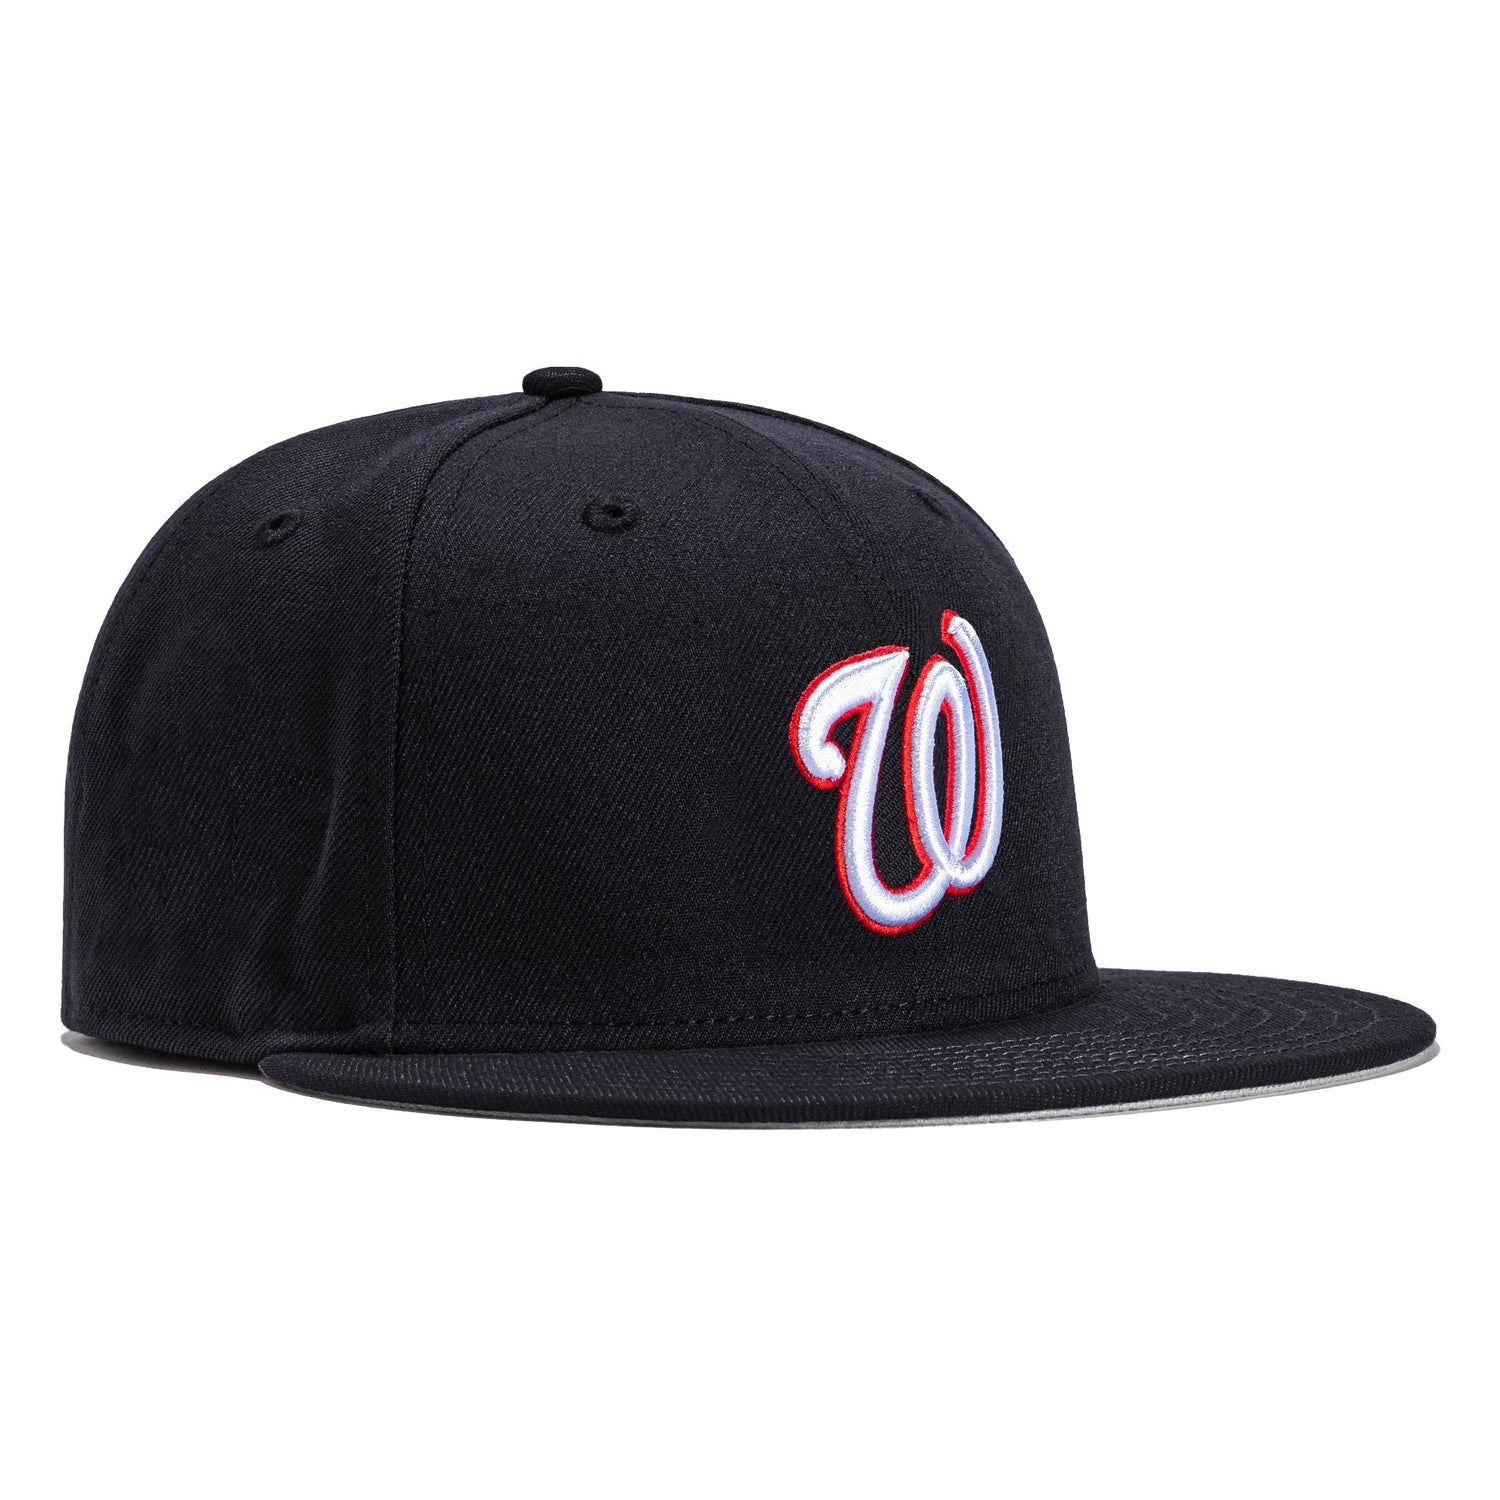 Washington Nationals Hats in Washington Nationals Team Shop